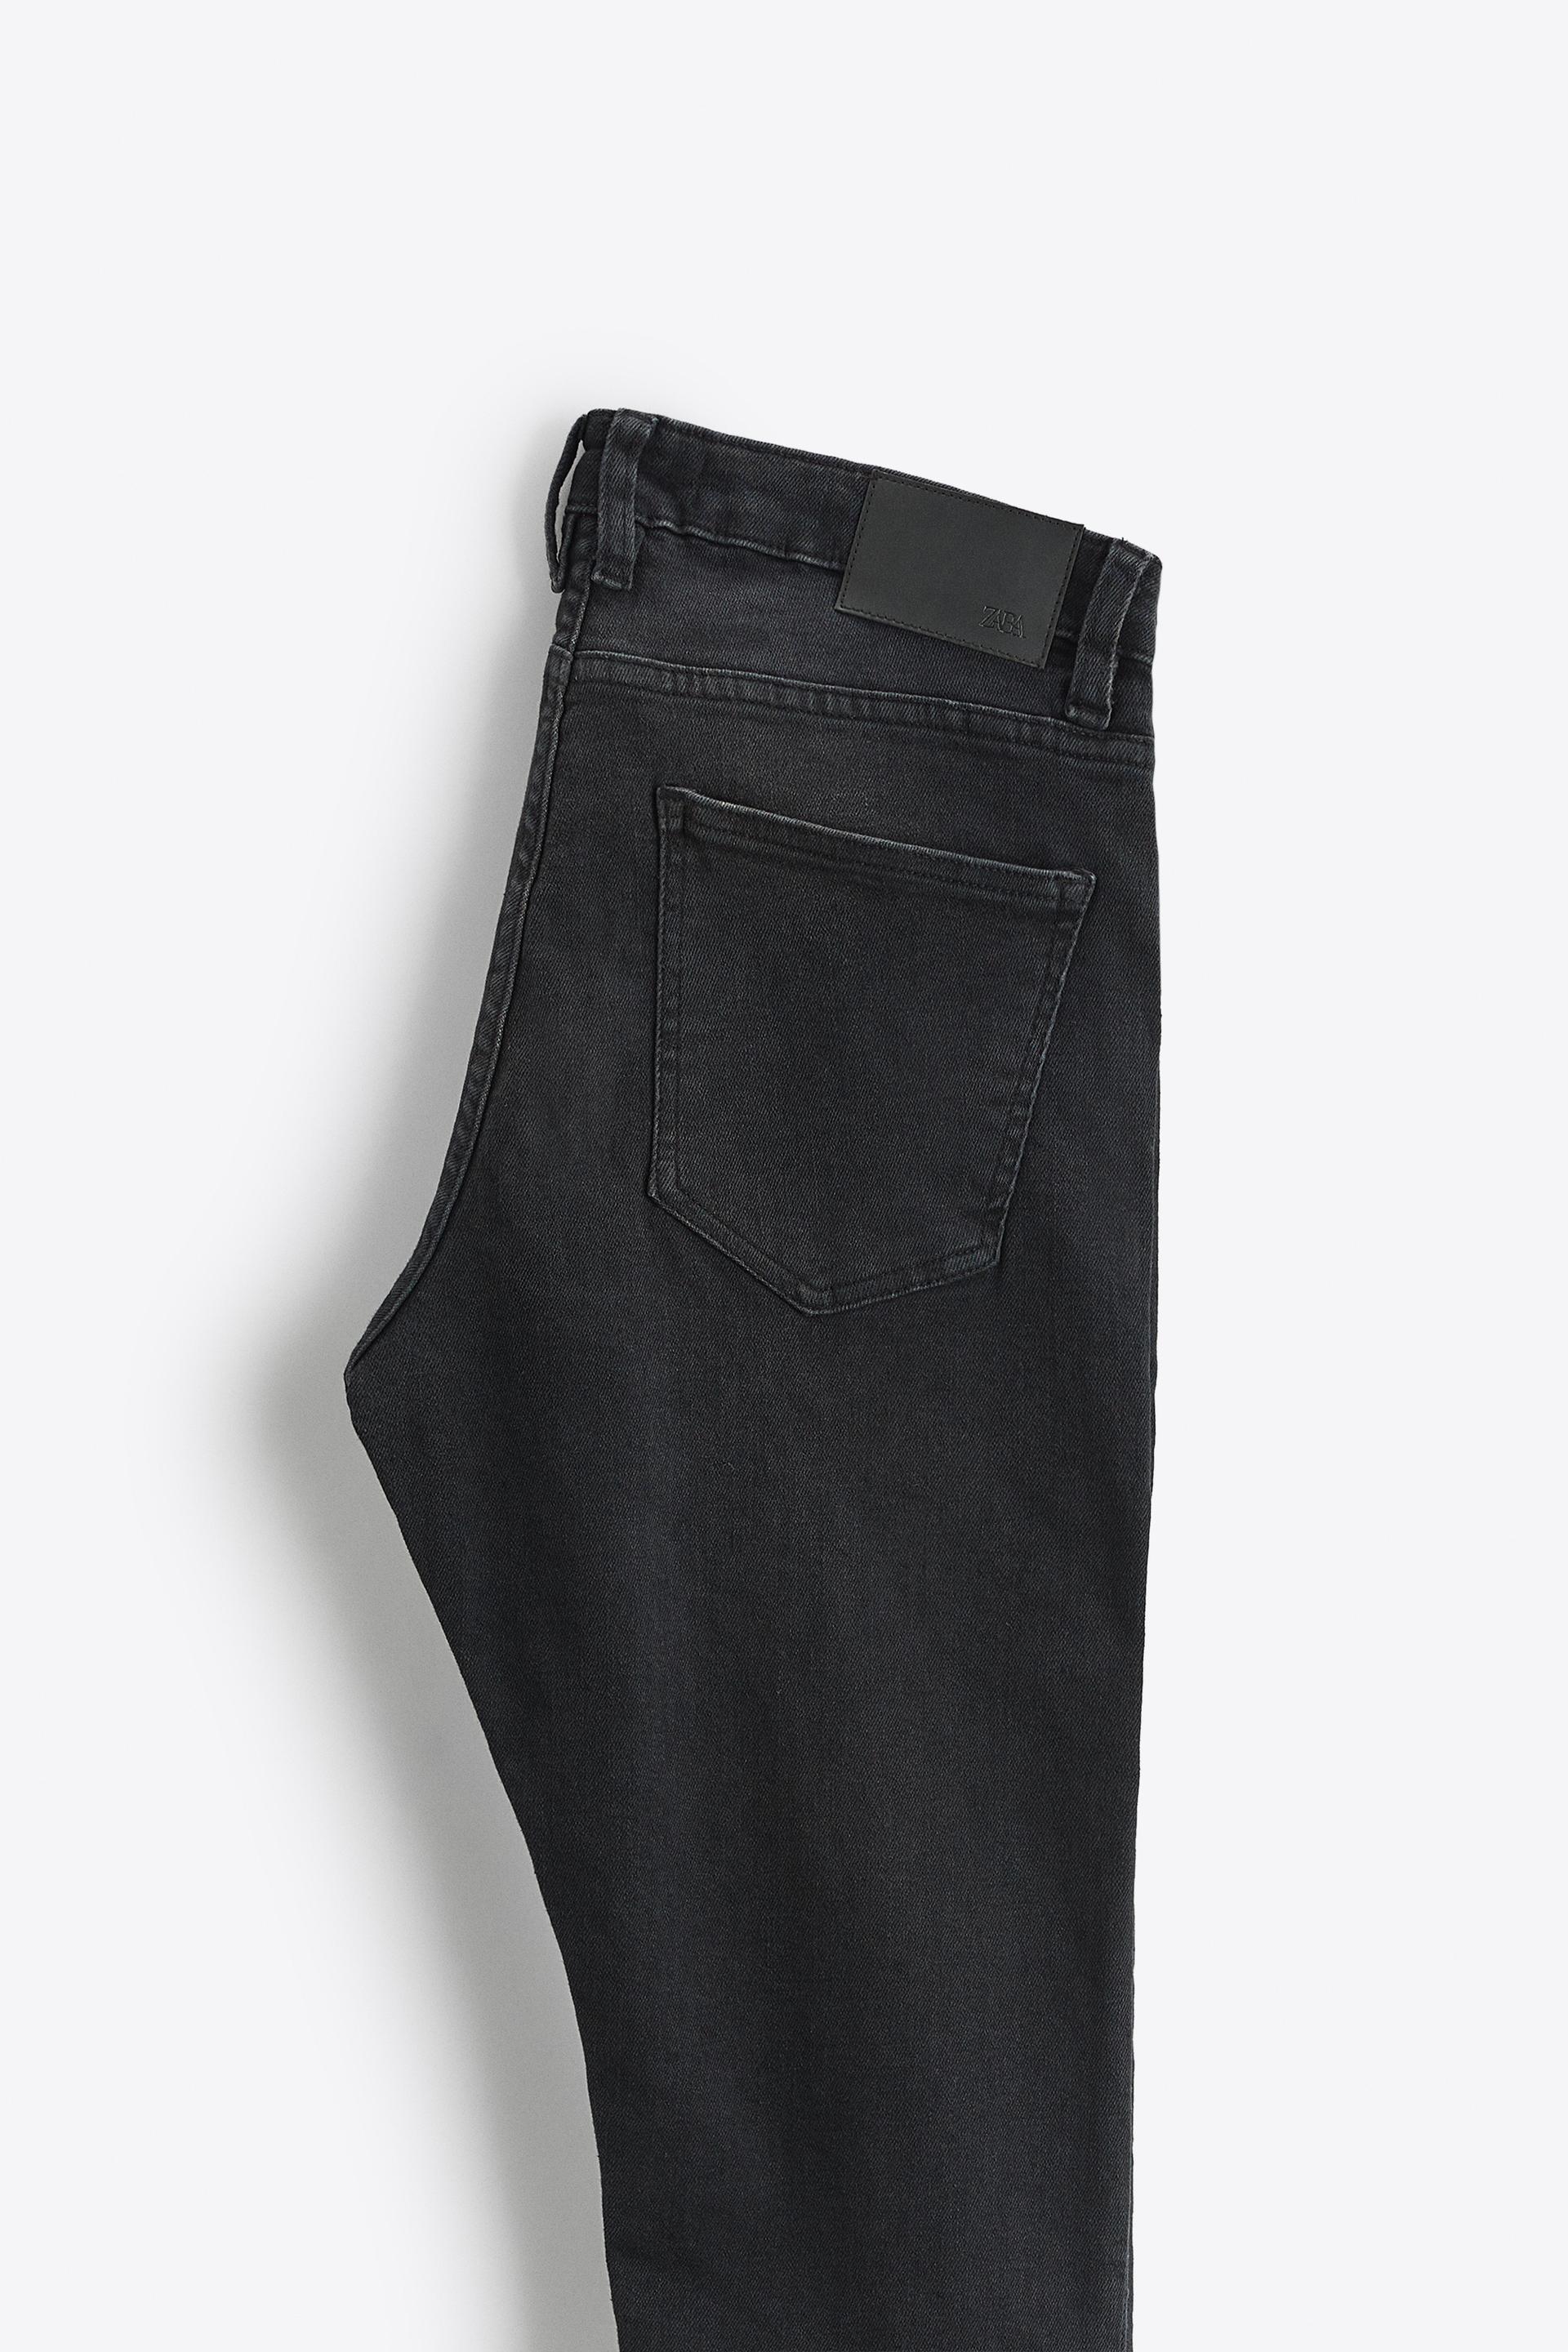 Zara Denim Jeans For Men